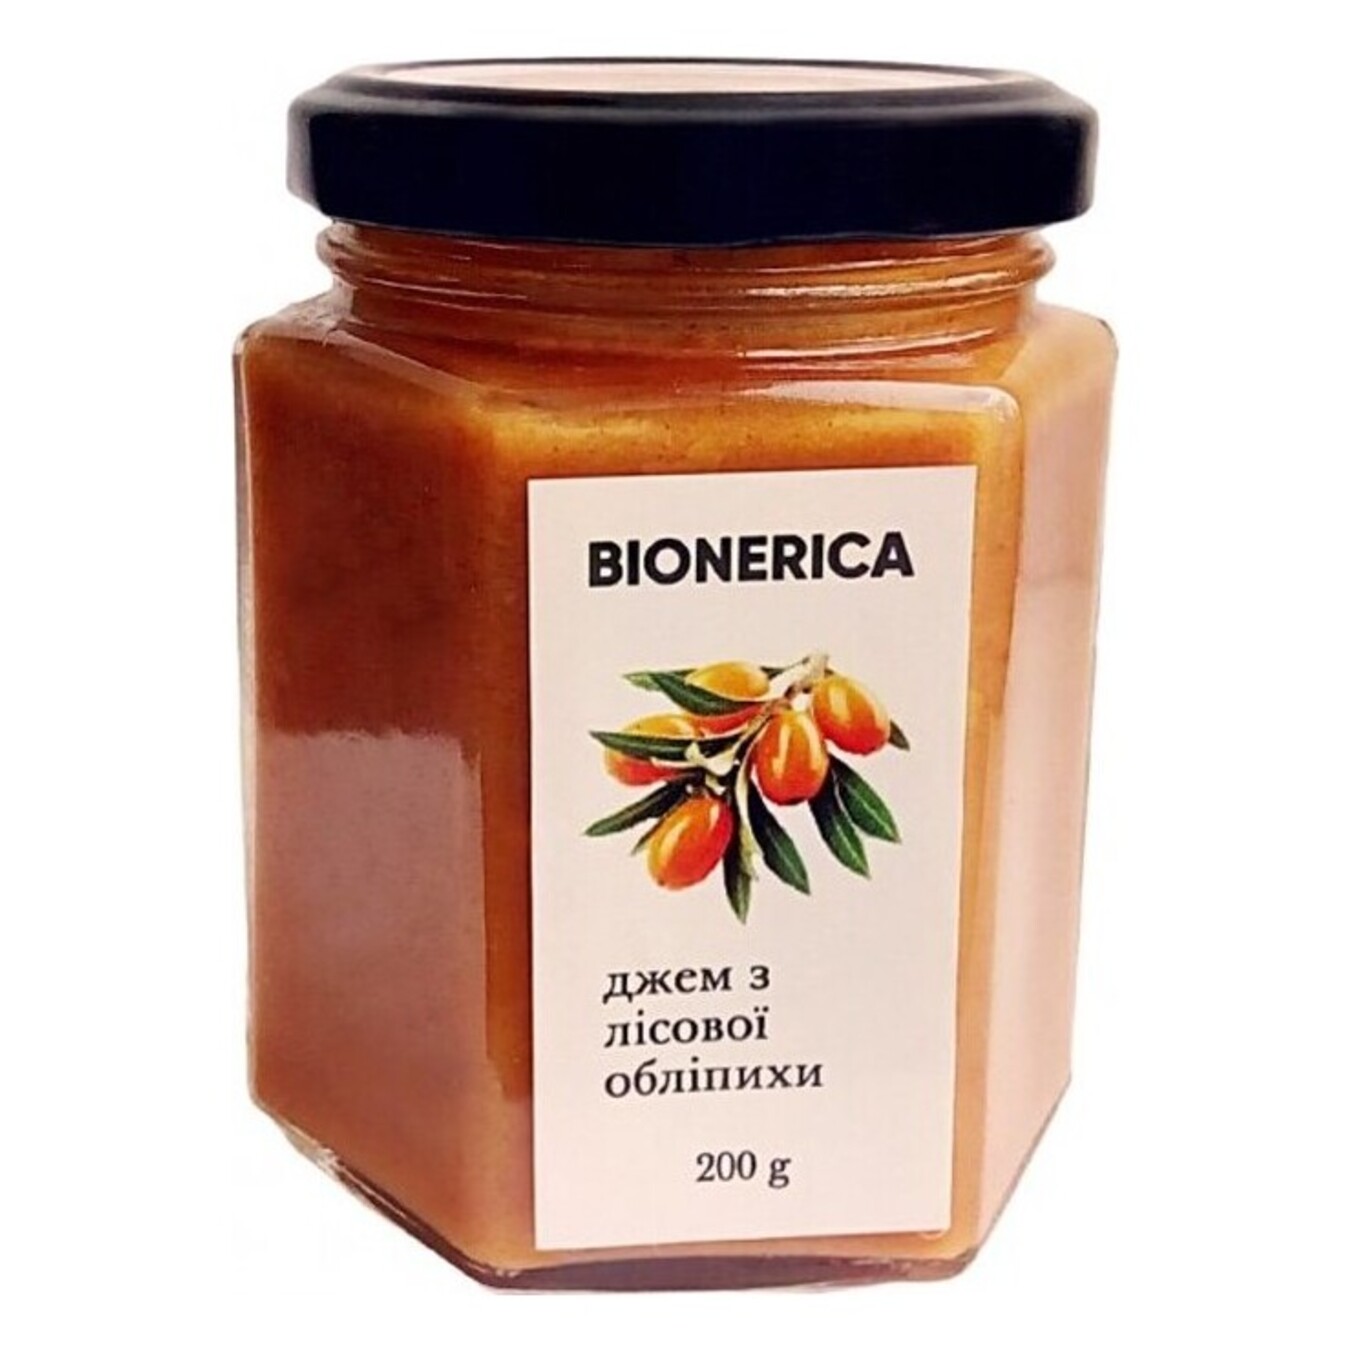 Bionerica jam from sea buckthorn 200g